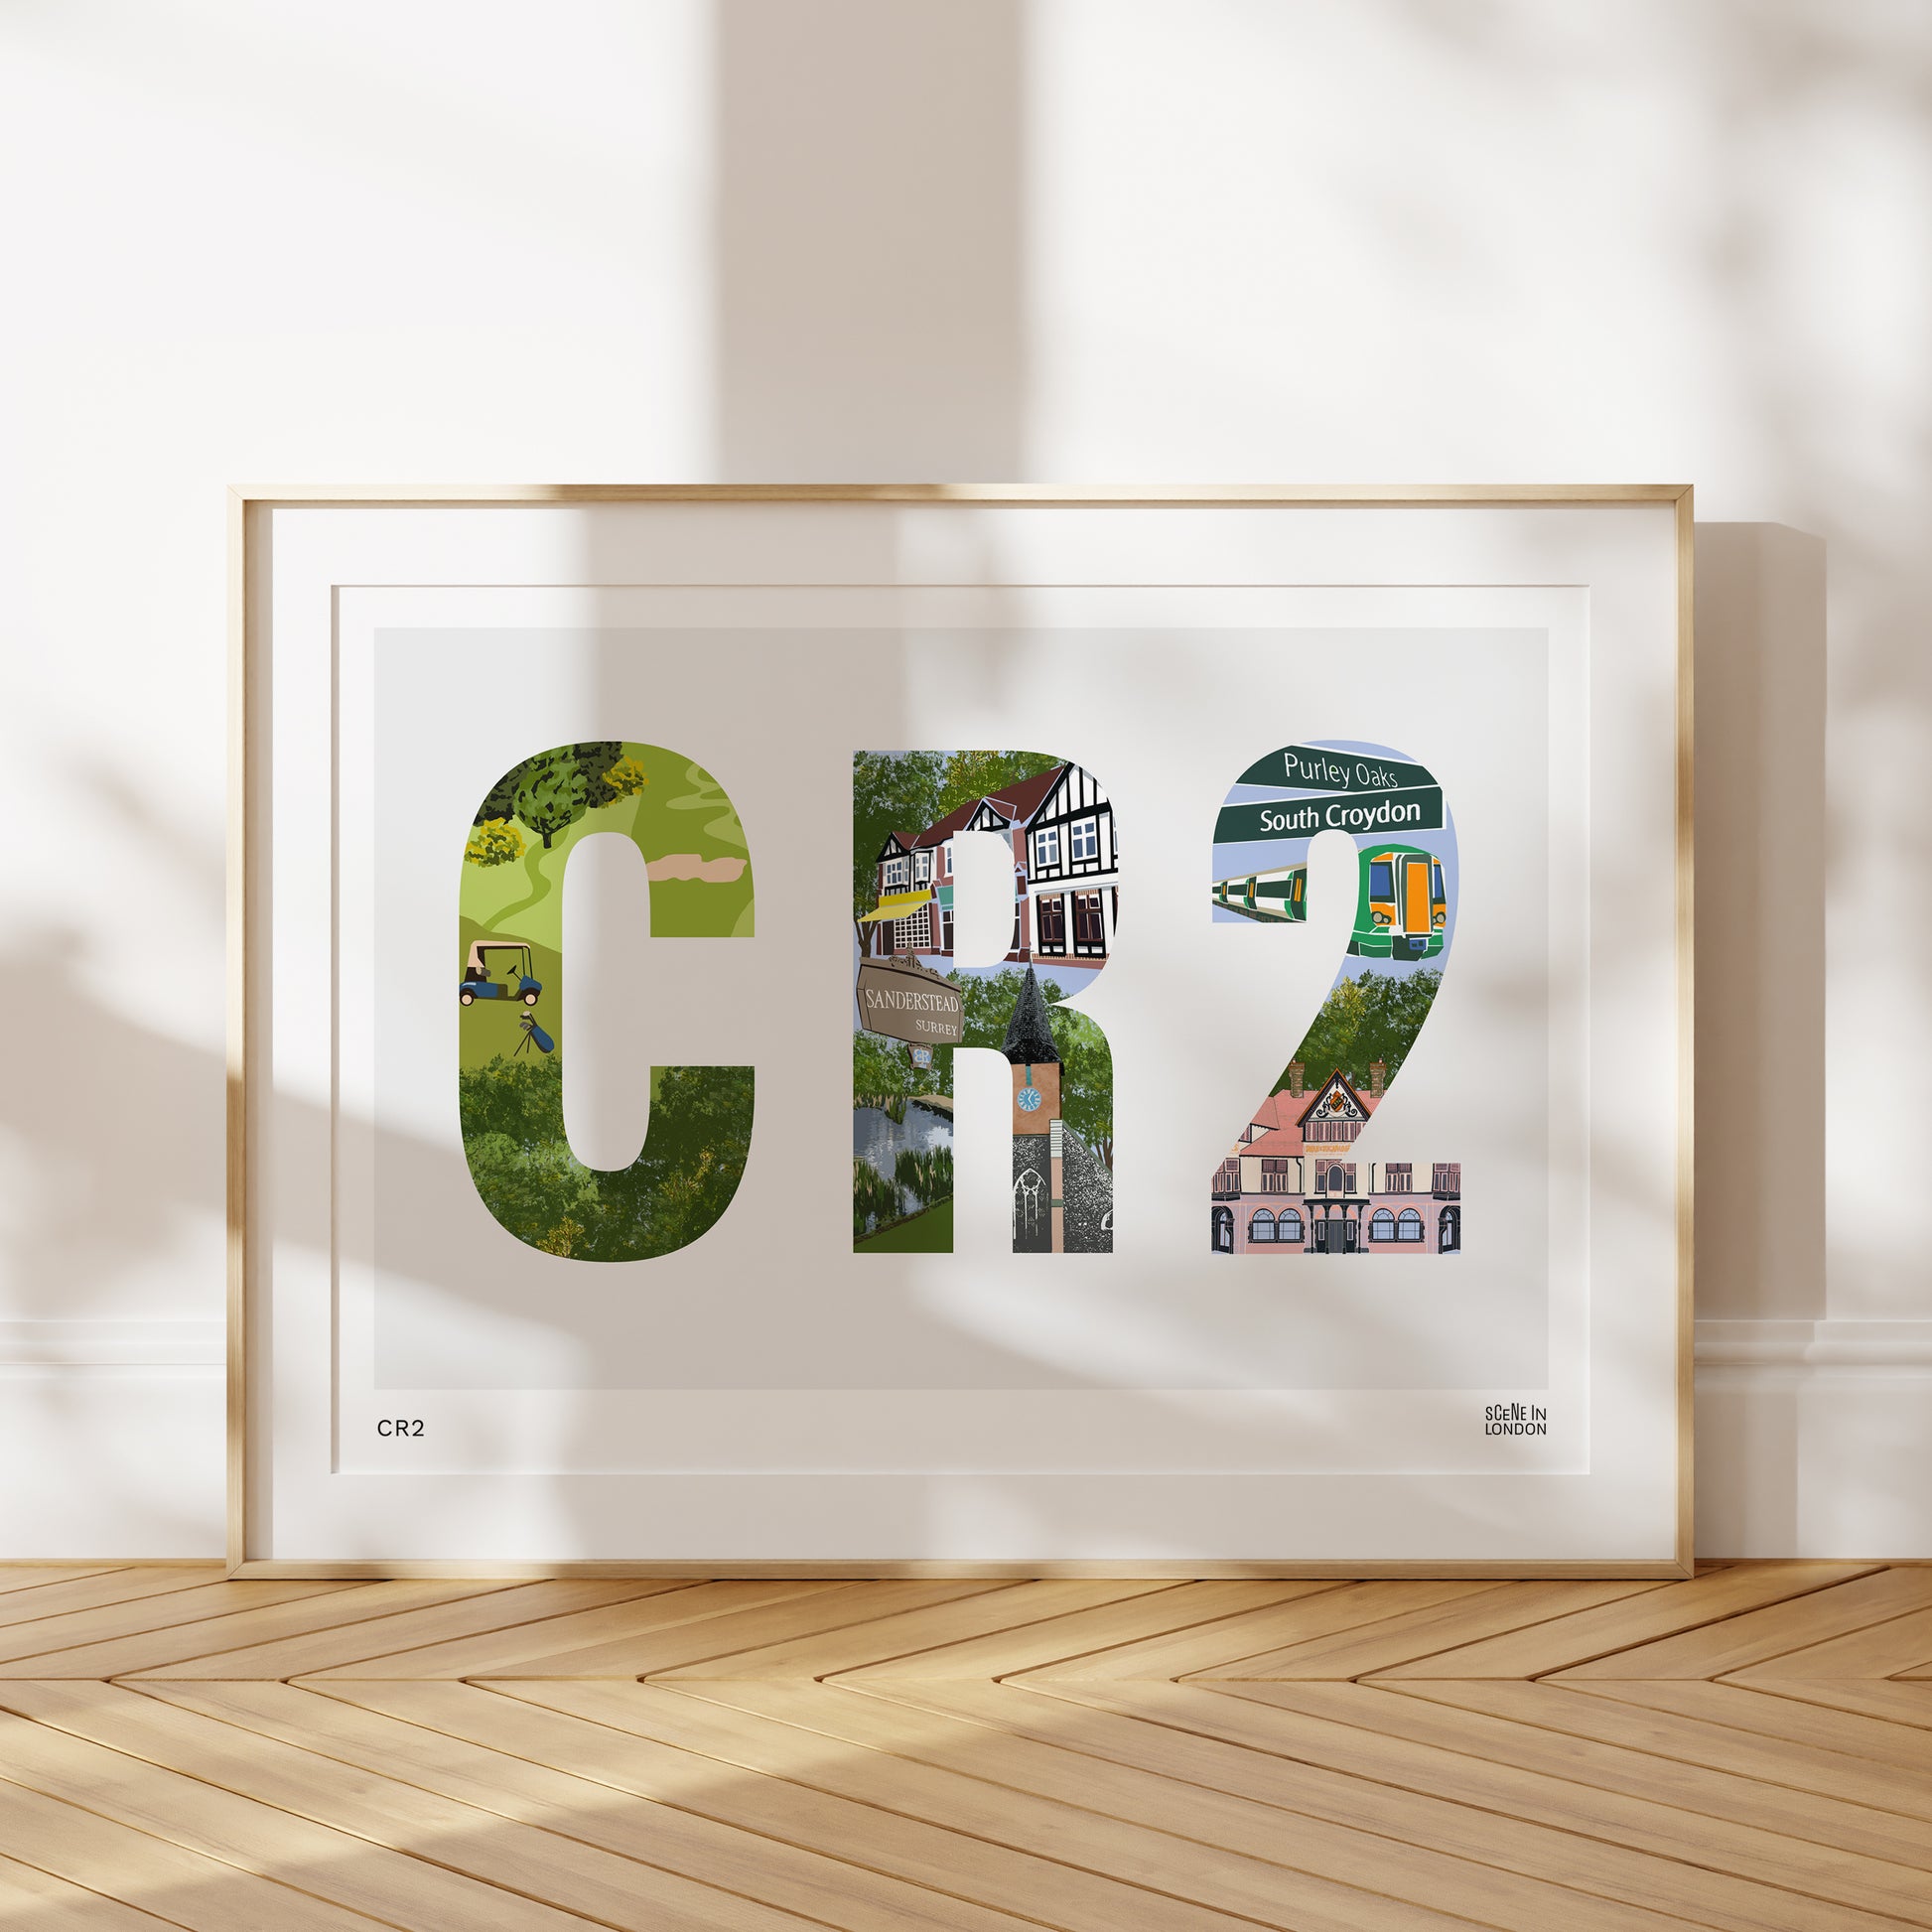 CR2 Croydon Print featuring places in Croydon